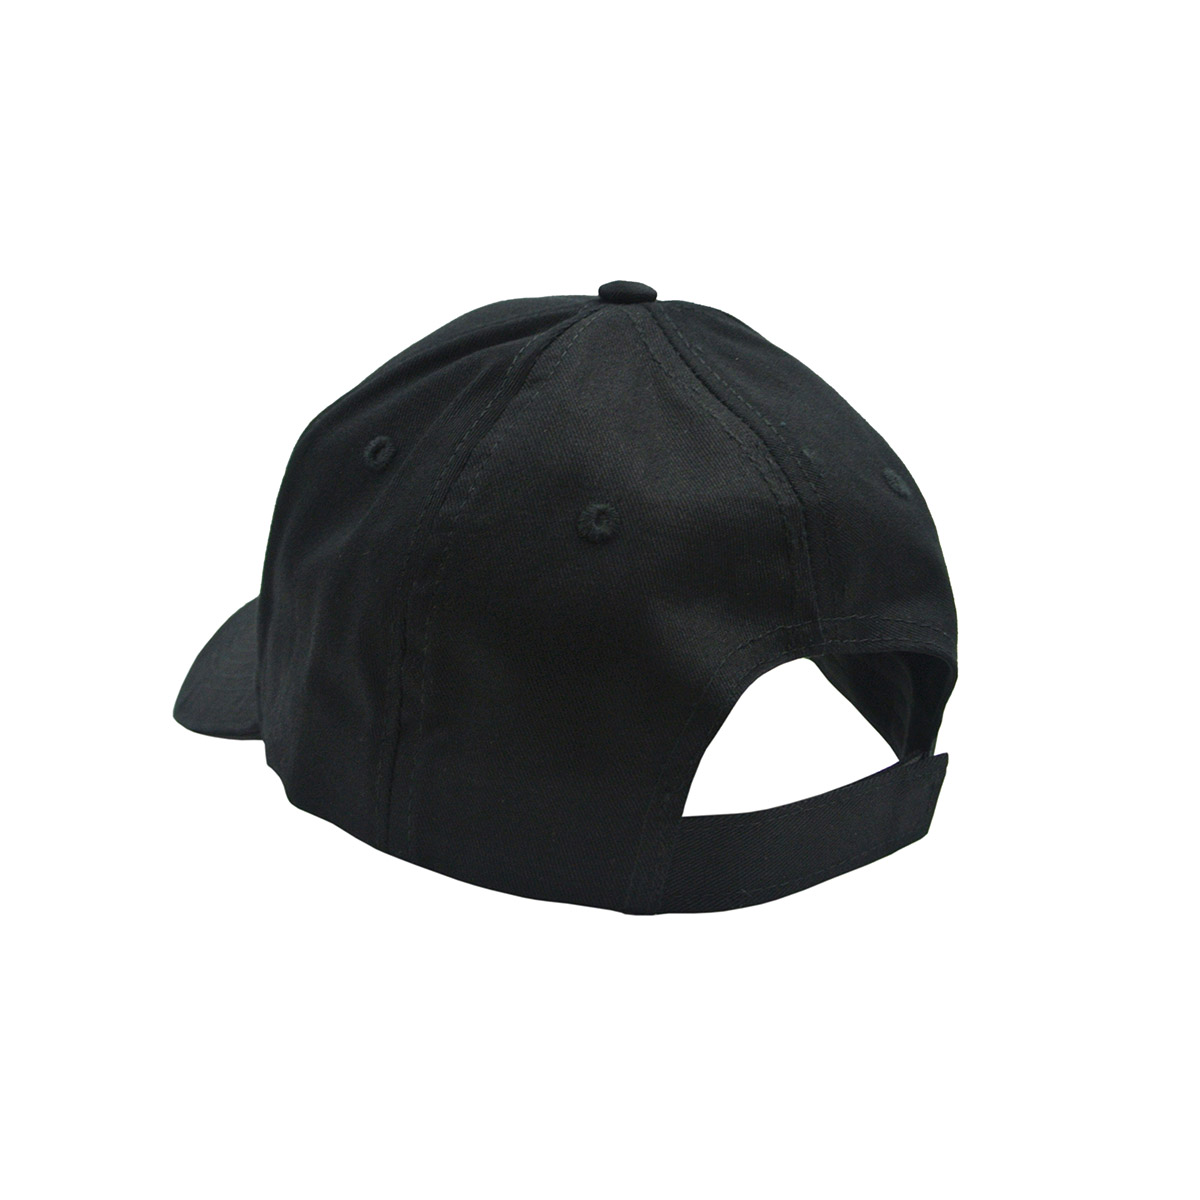 Dante Sports Black Adjustable Cap